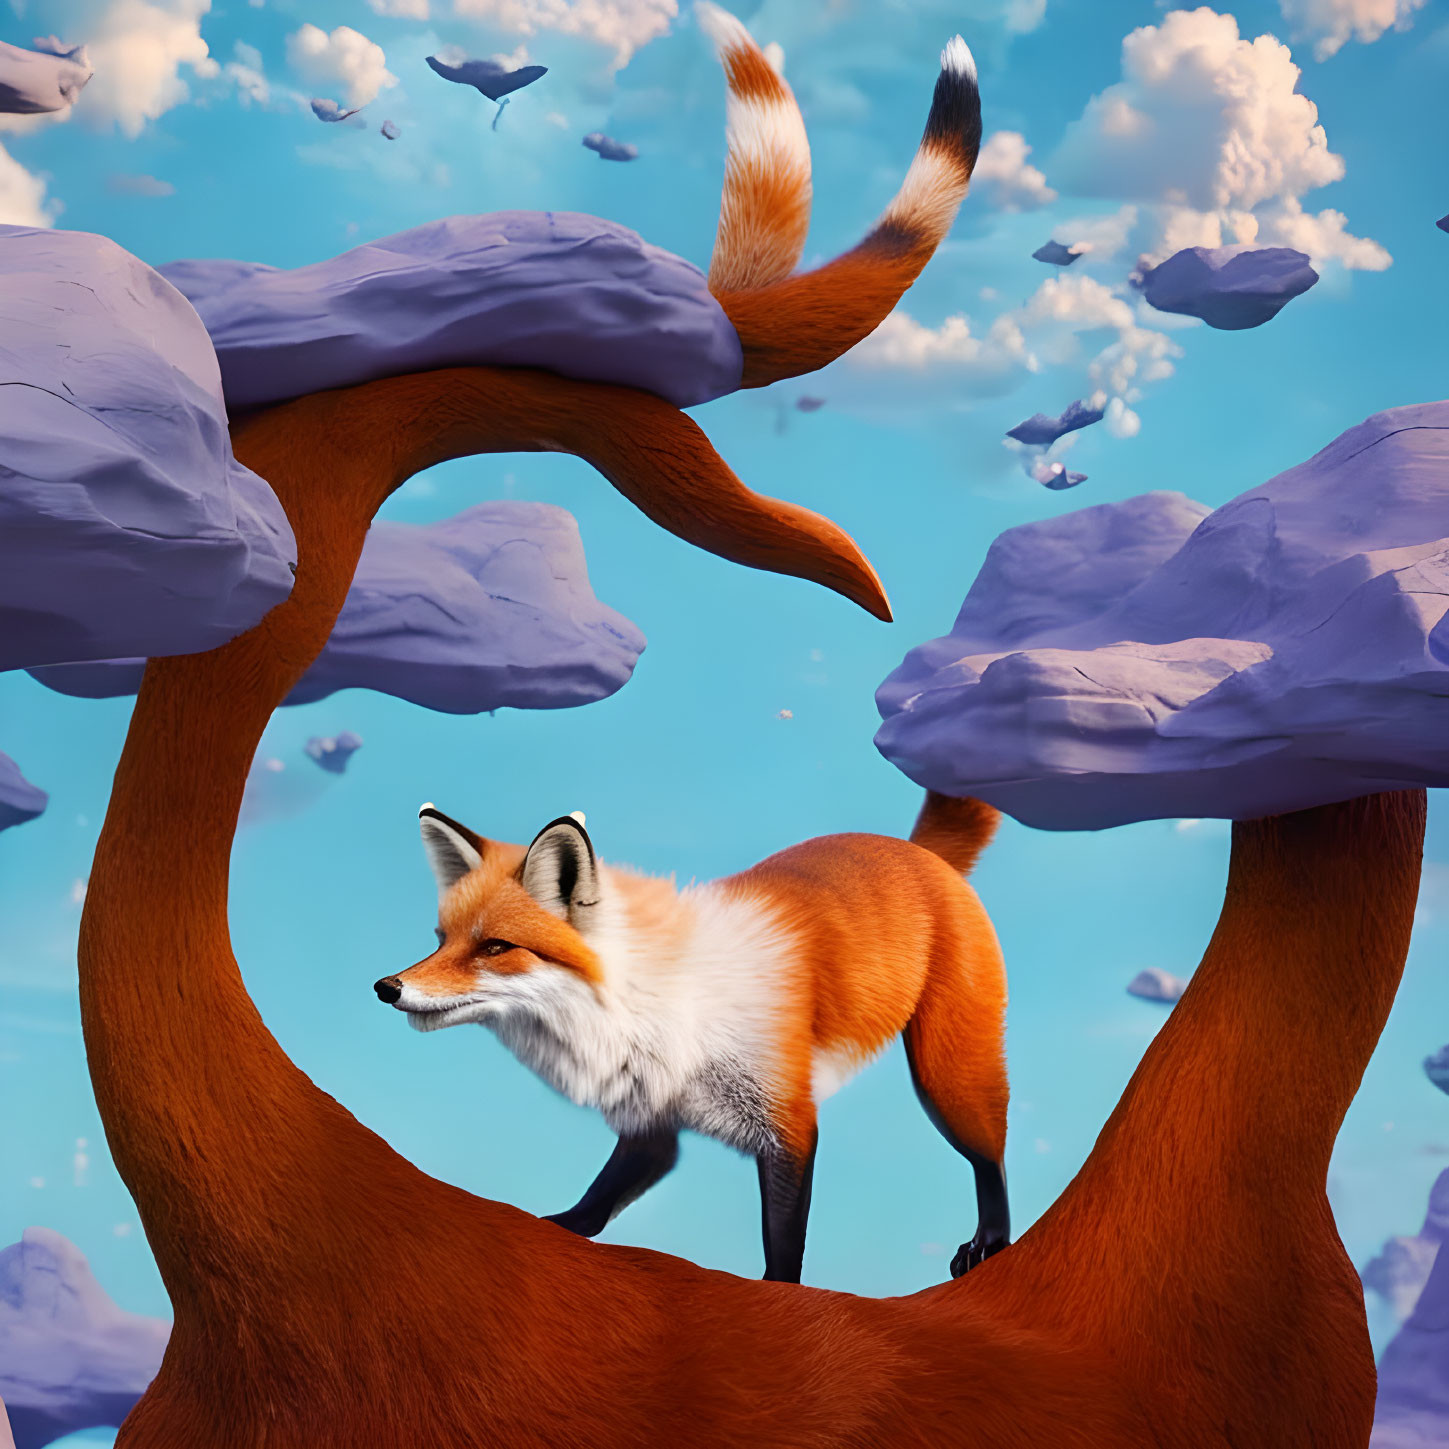 Fox dream 10: The space between. 